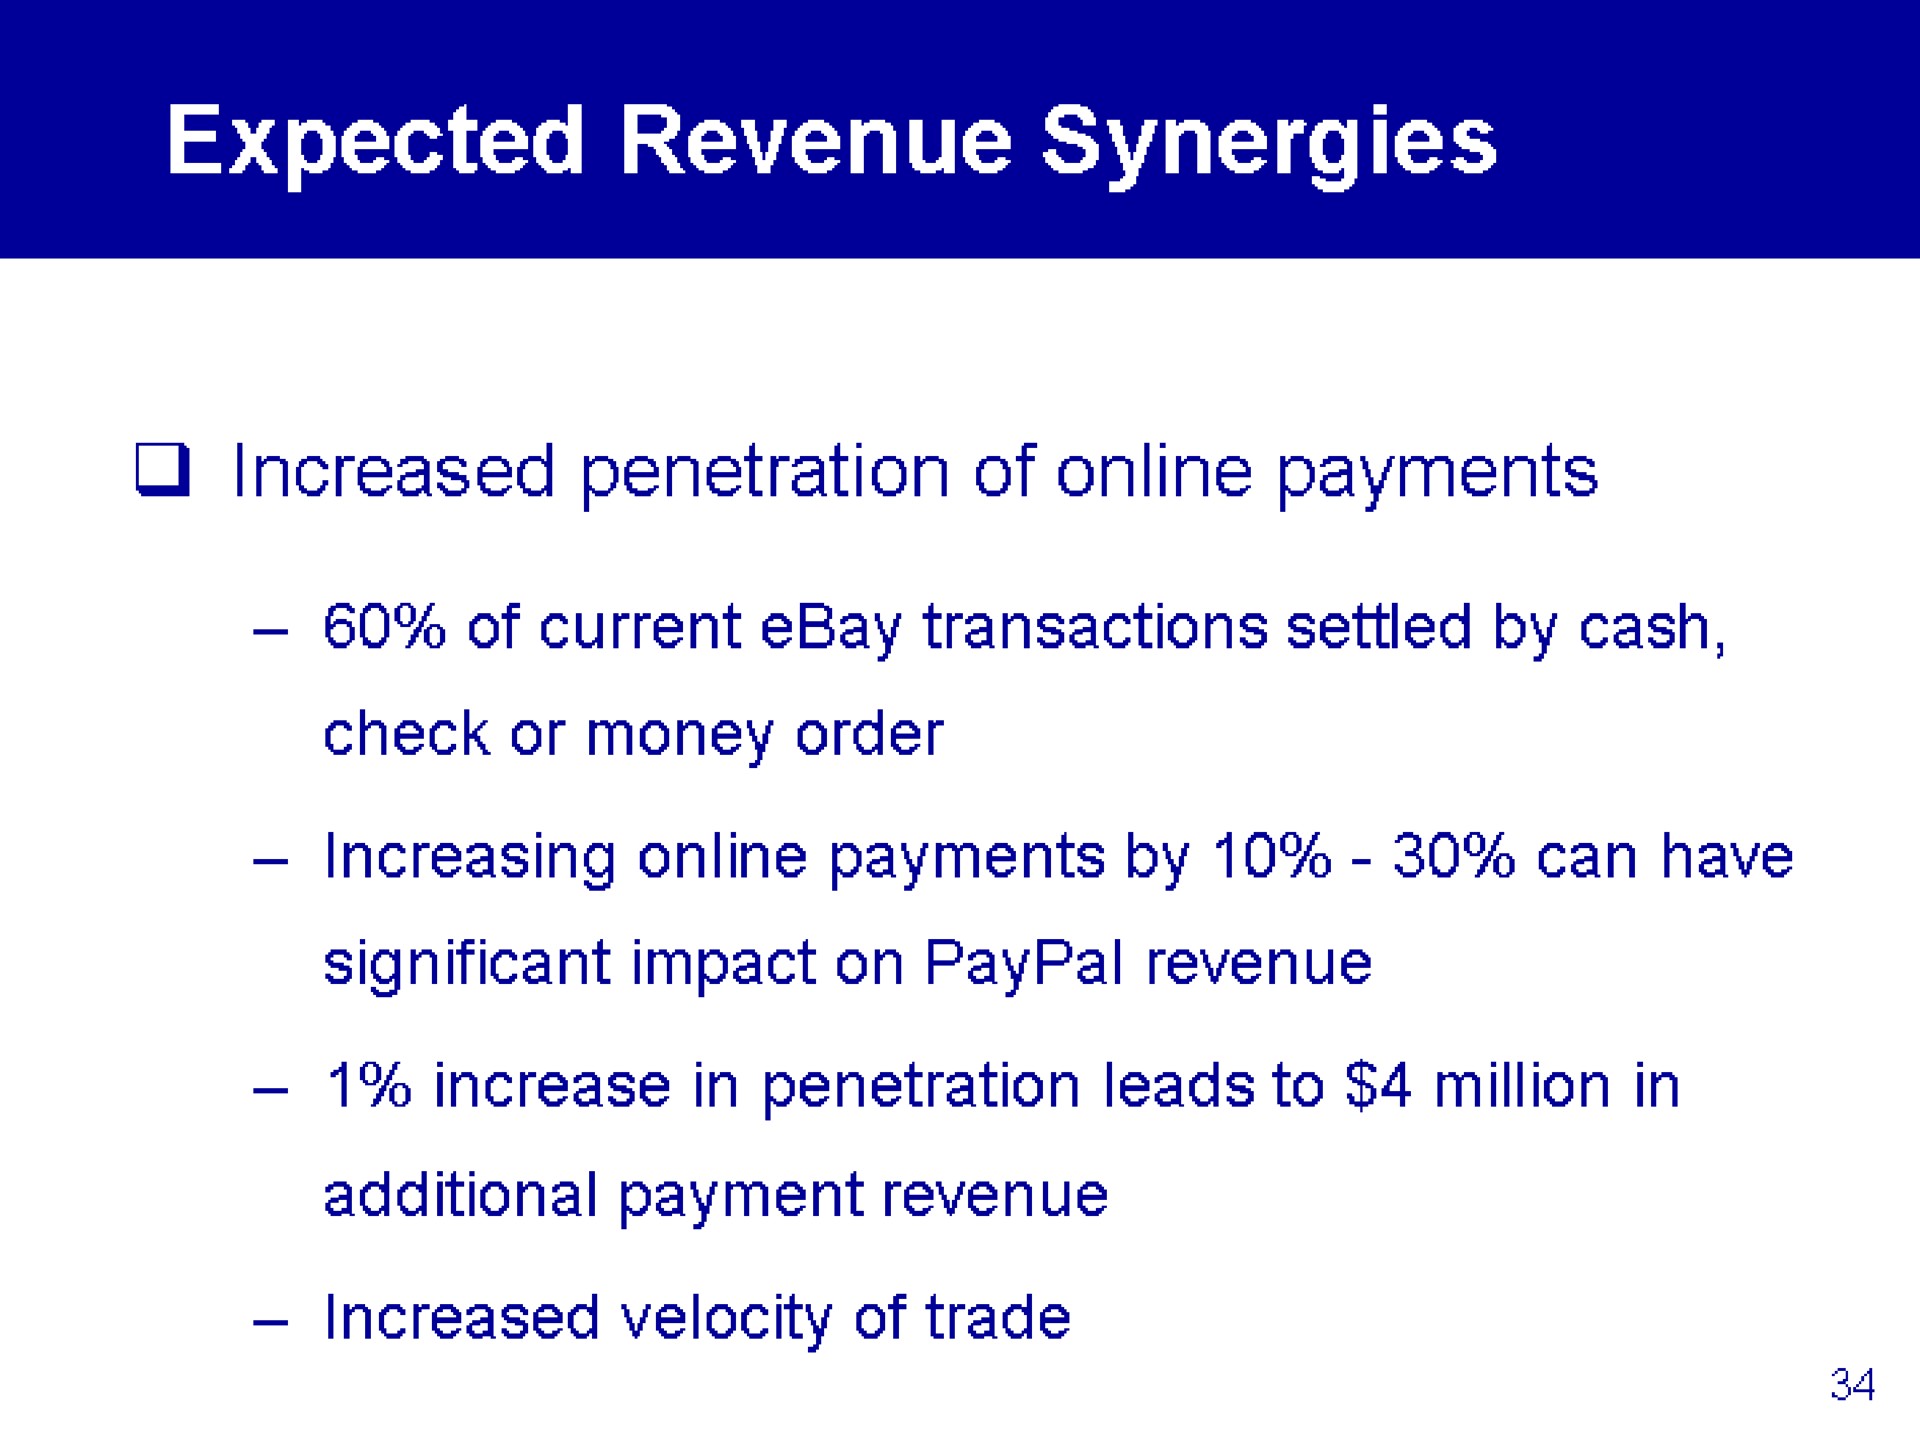 expected revenue synergies | eBay